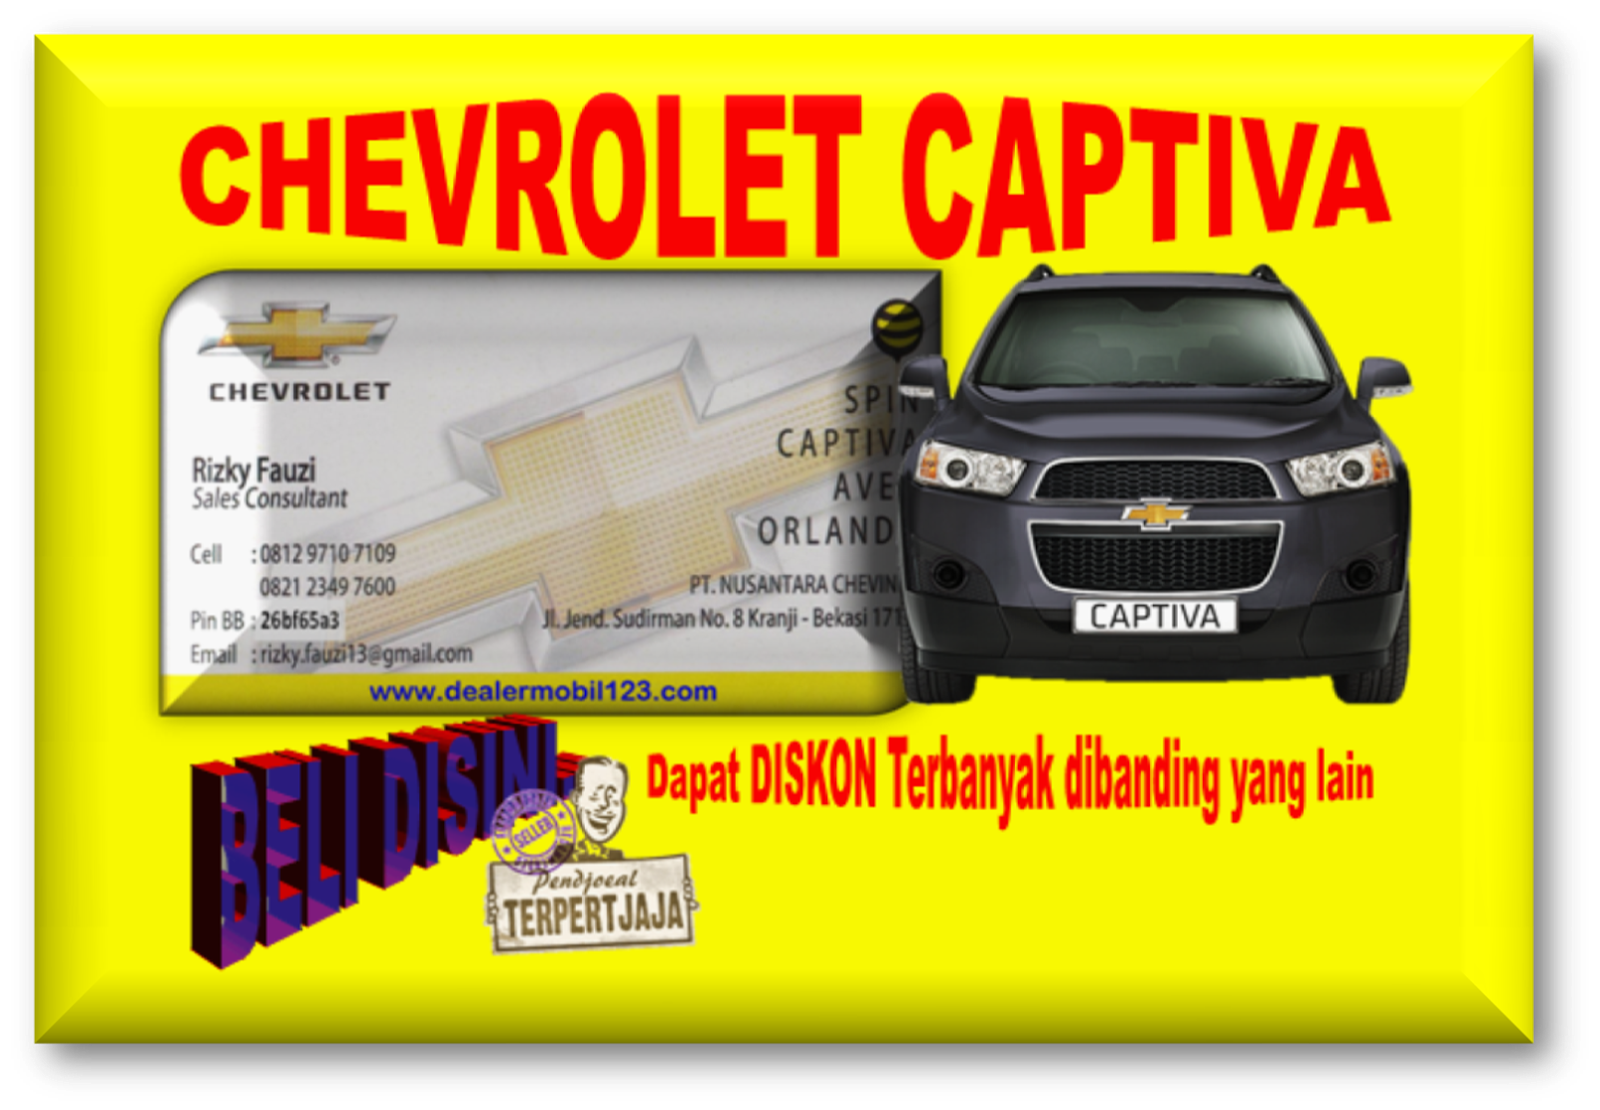 Chevrolet Captiva Diskon Terbanyak 0812 9710 7109